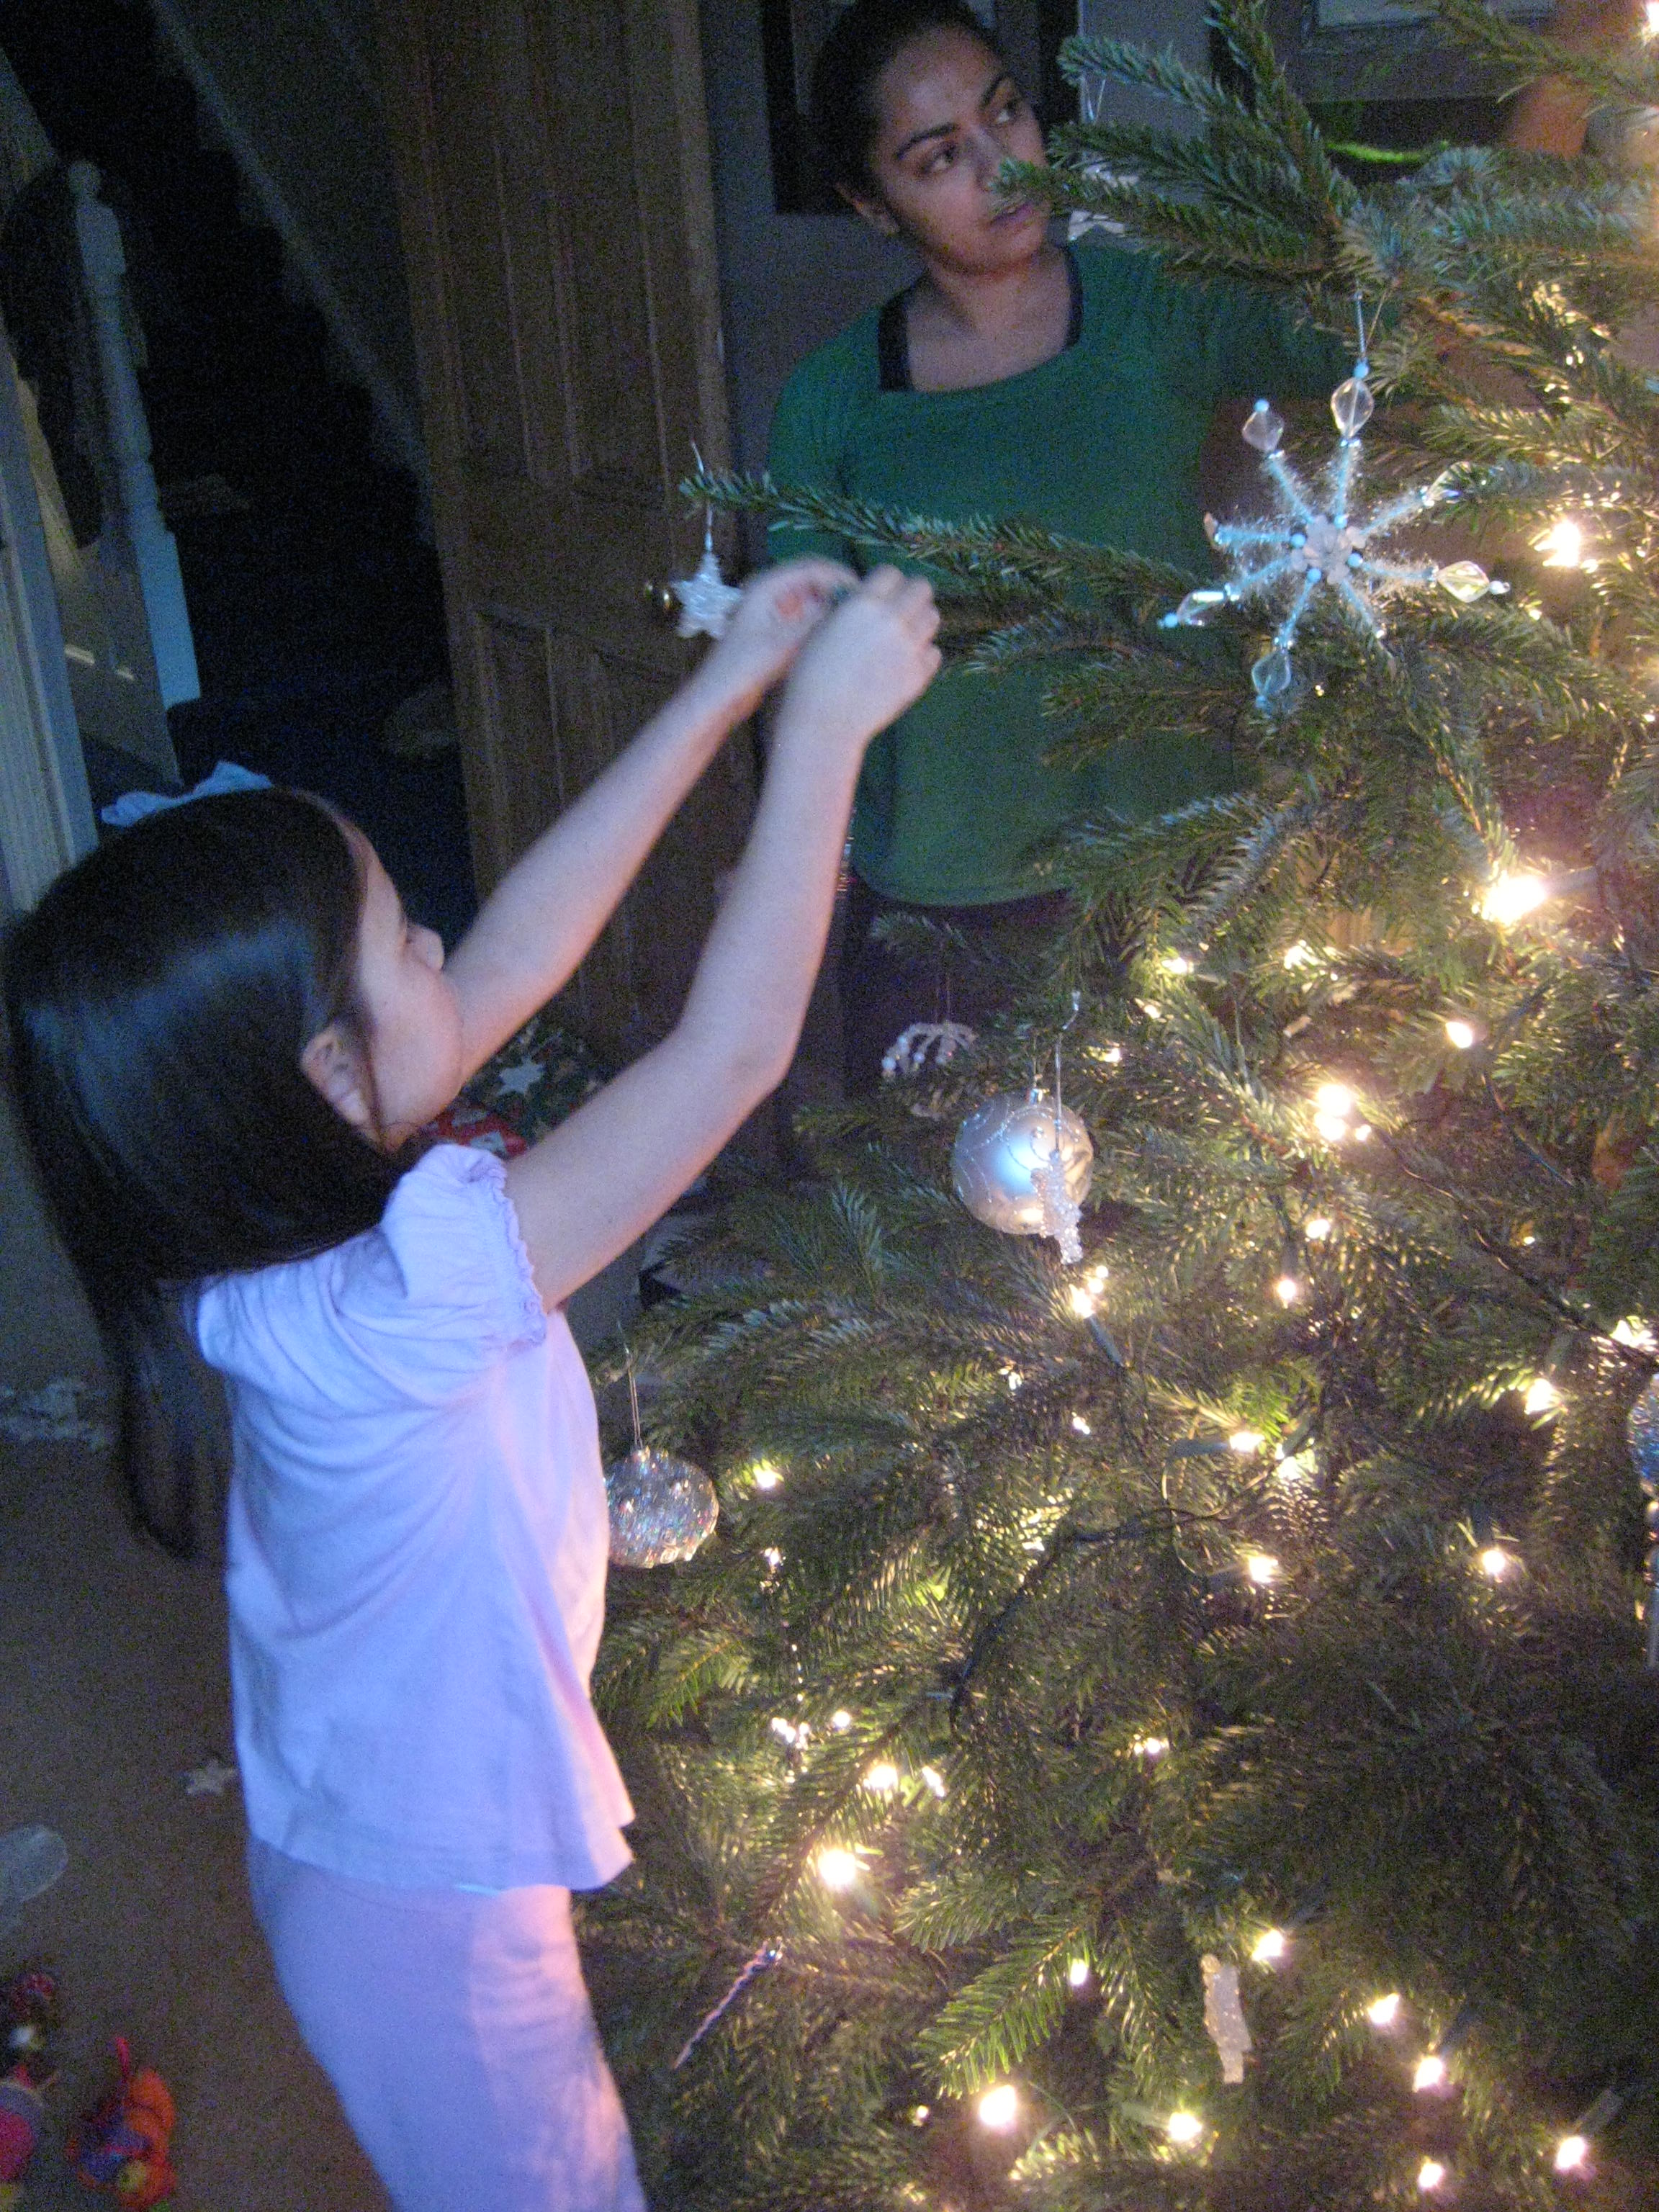 Reaching up the Christmas Tree